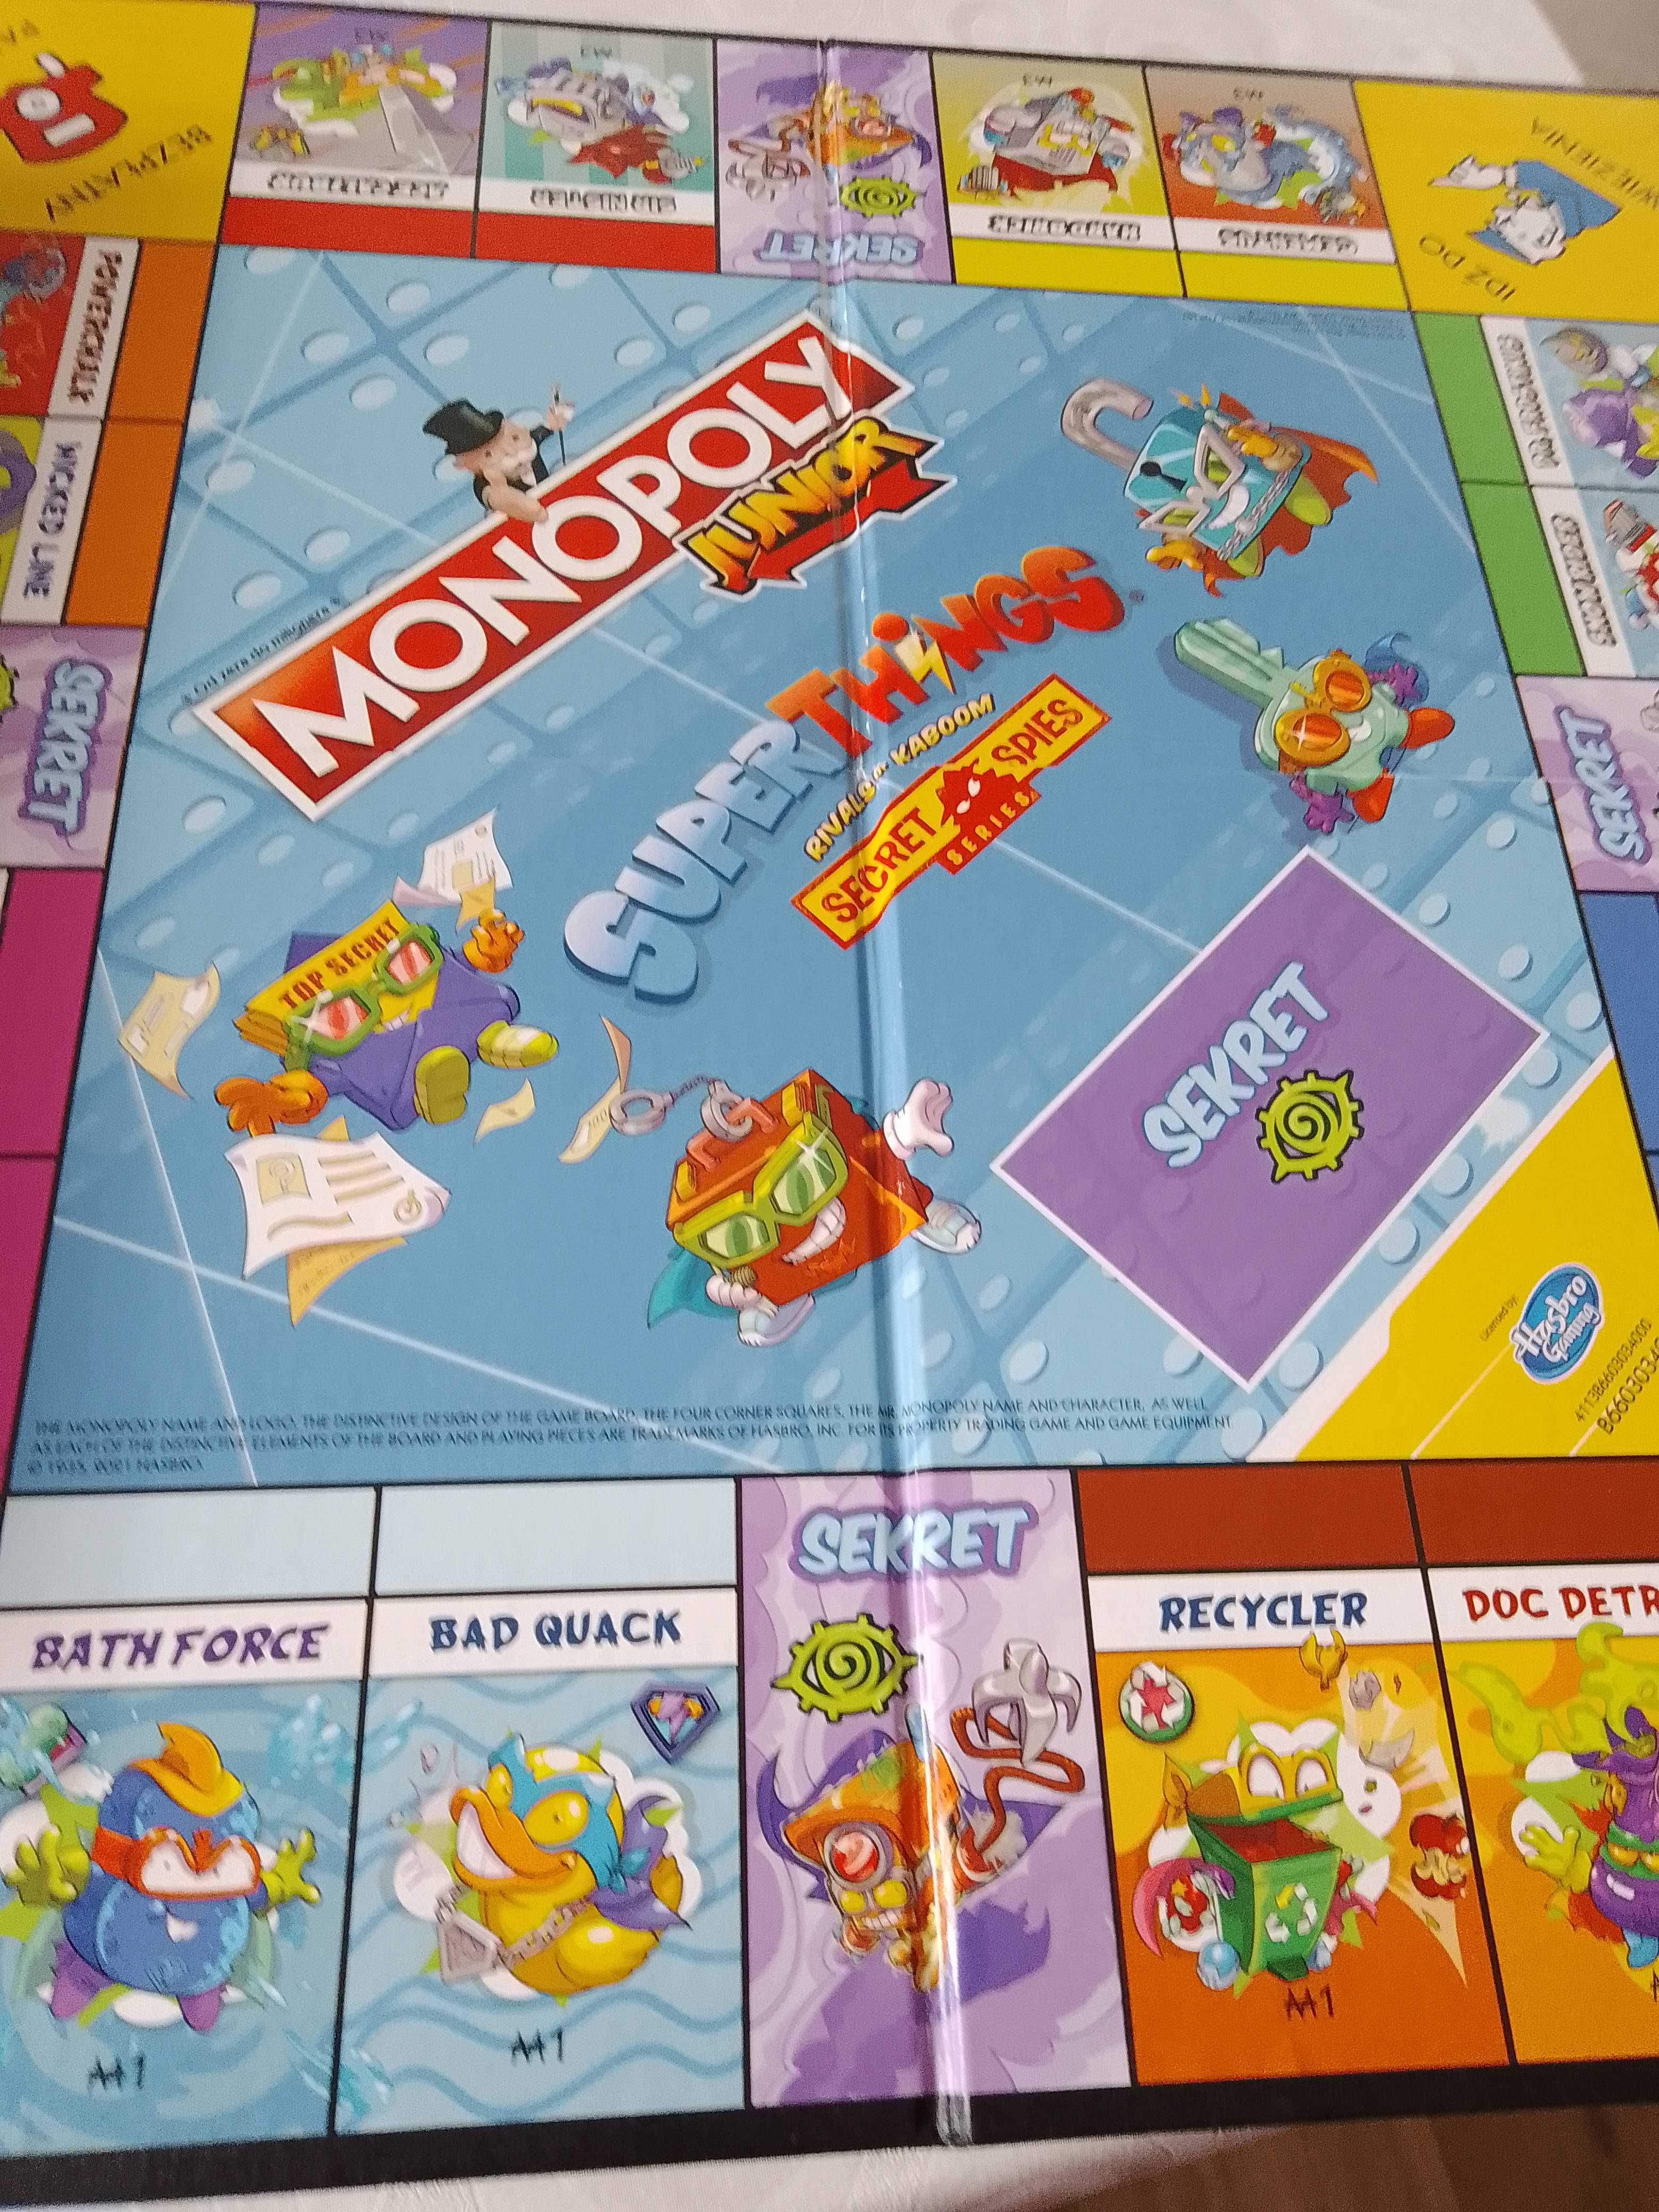 Monopoly Junior Super Things